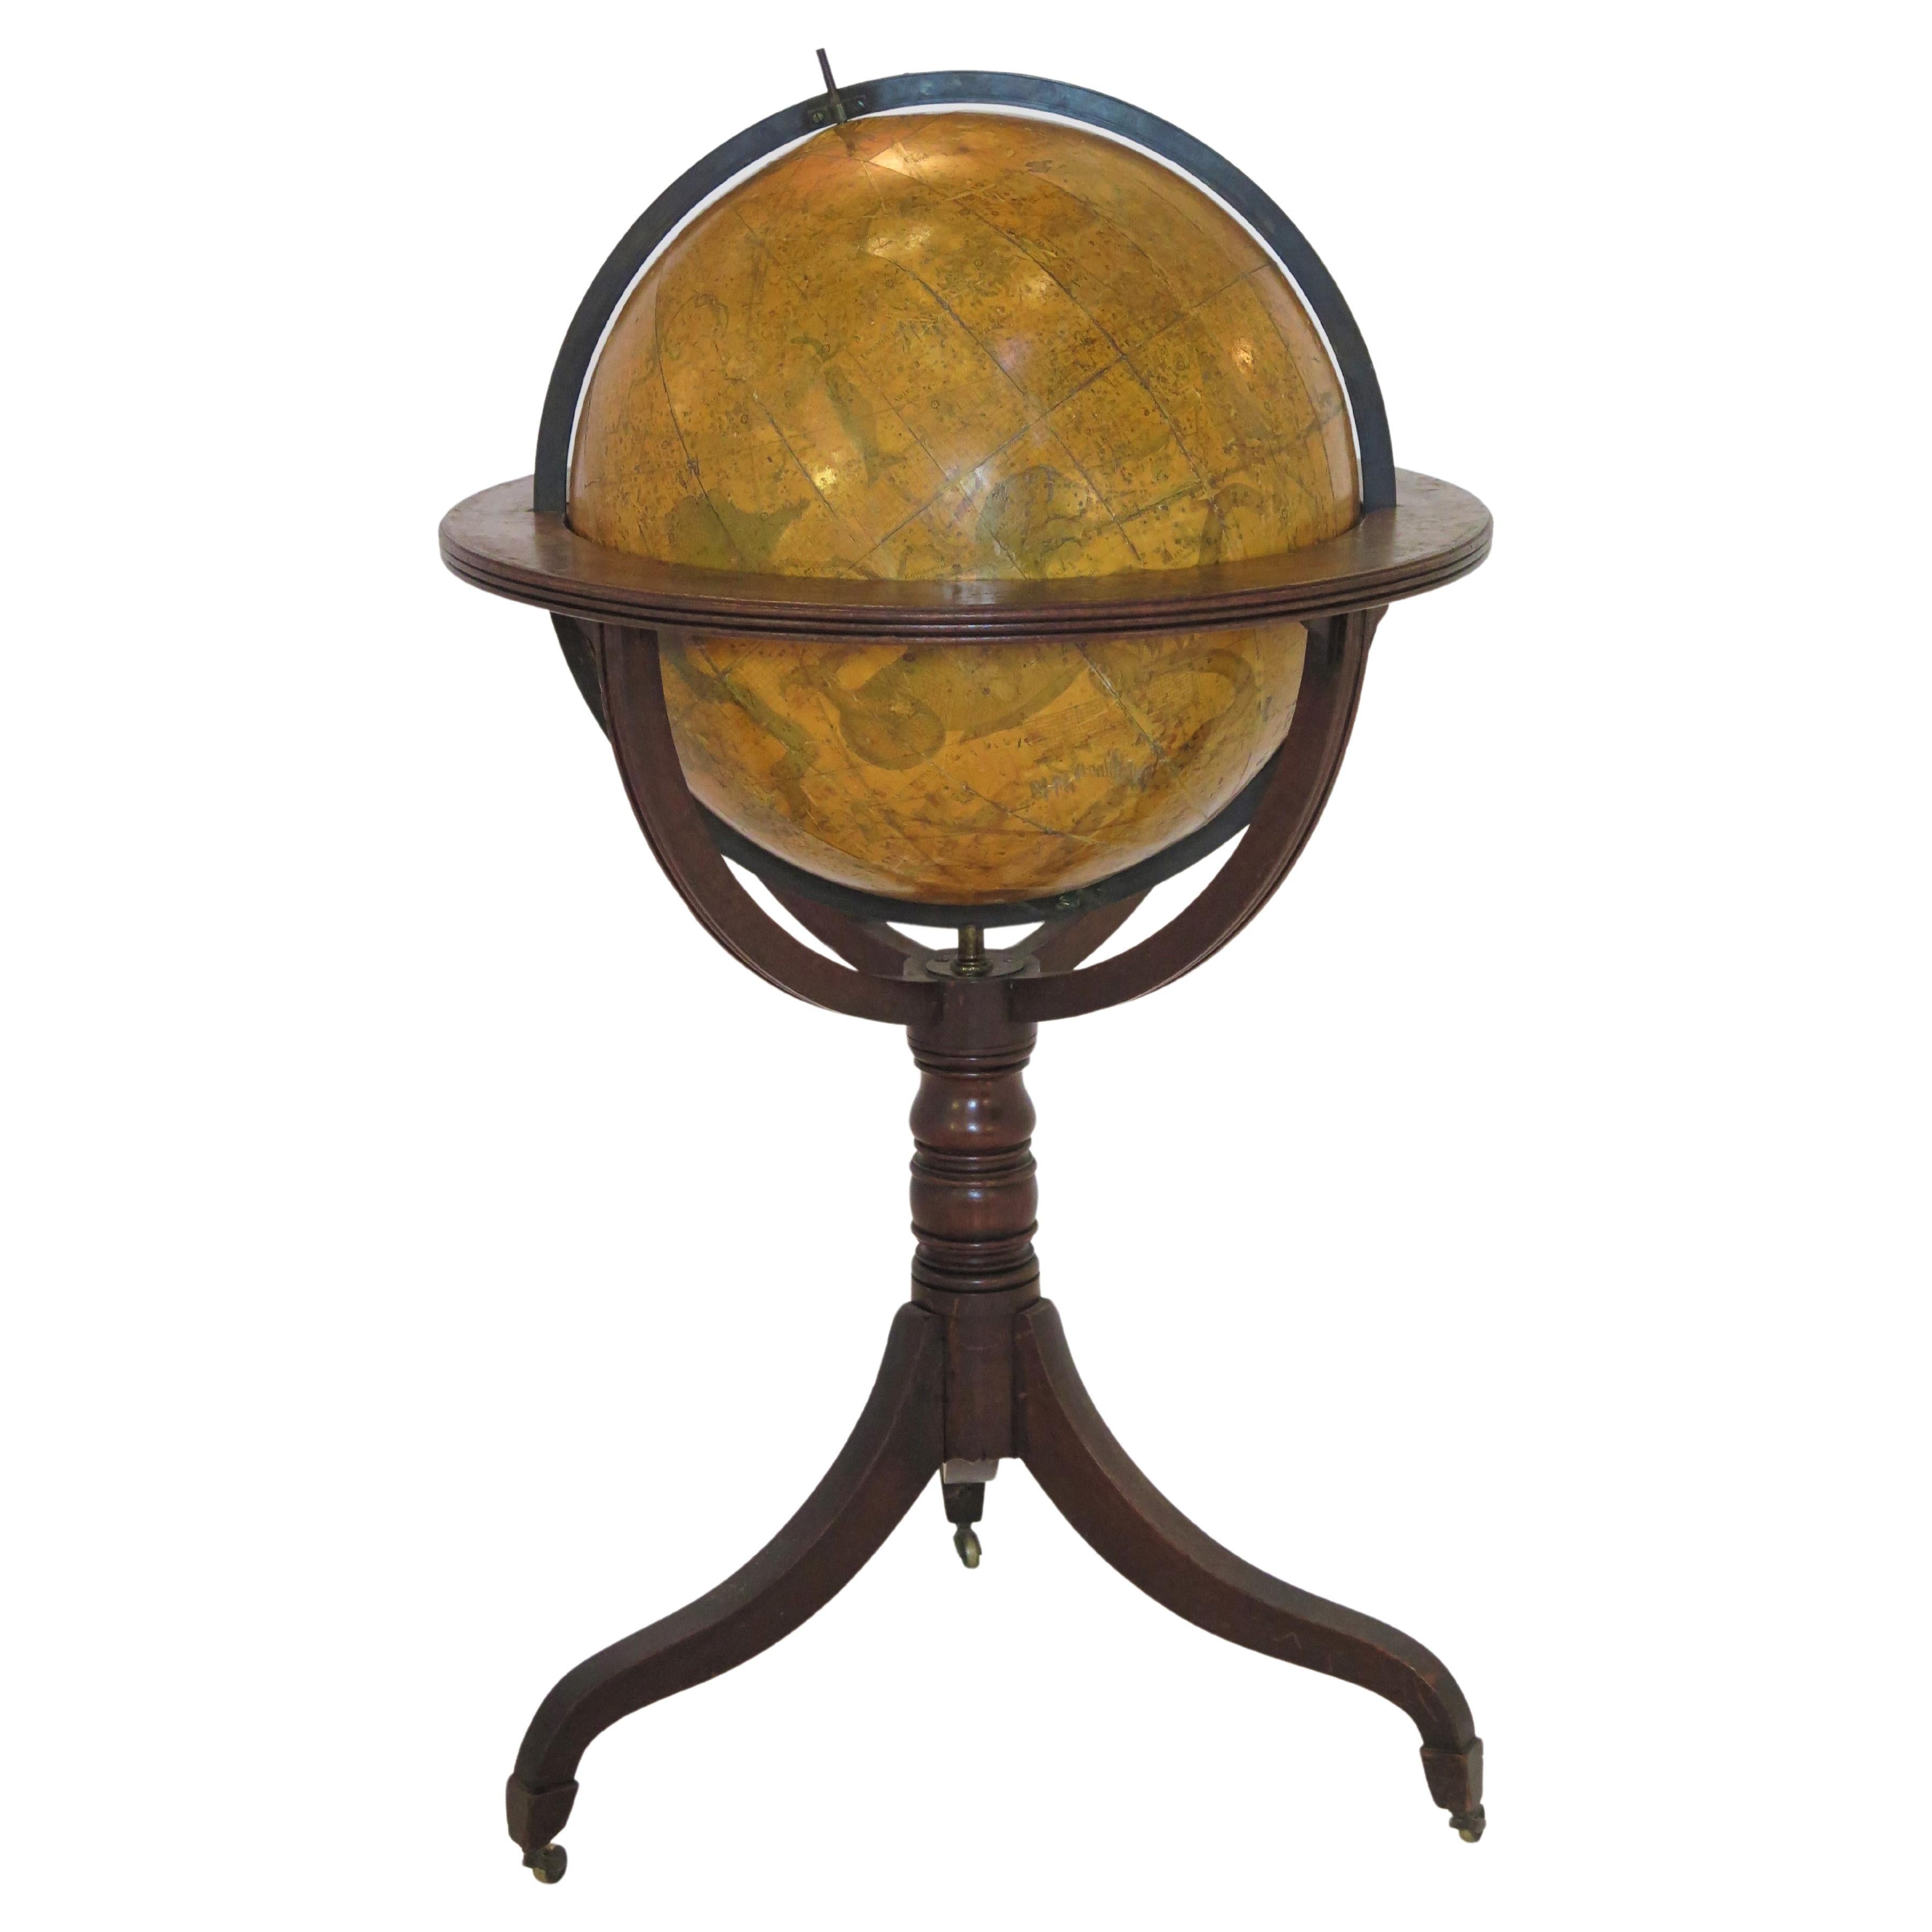 A George III Eighteen Inch Celestial Globe by W. and T.M. Bardin